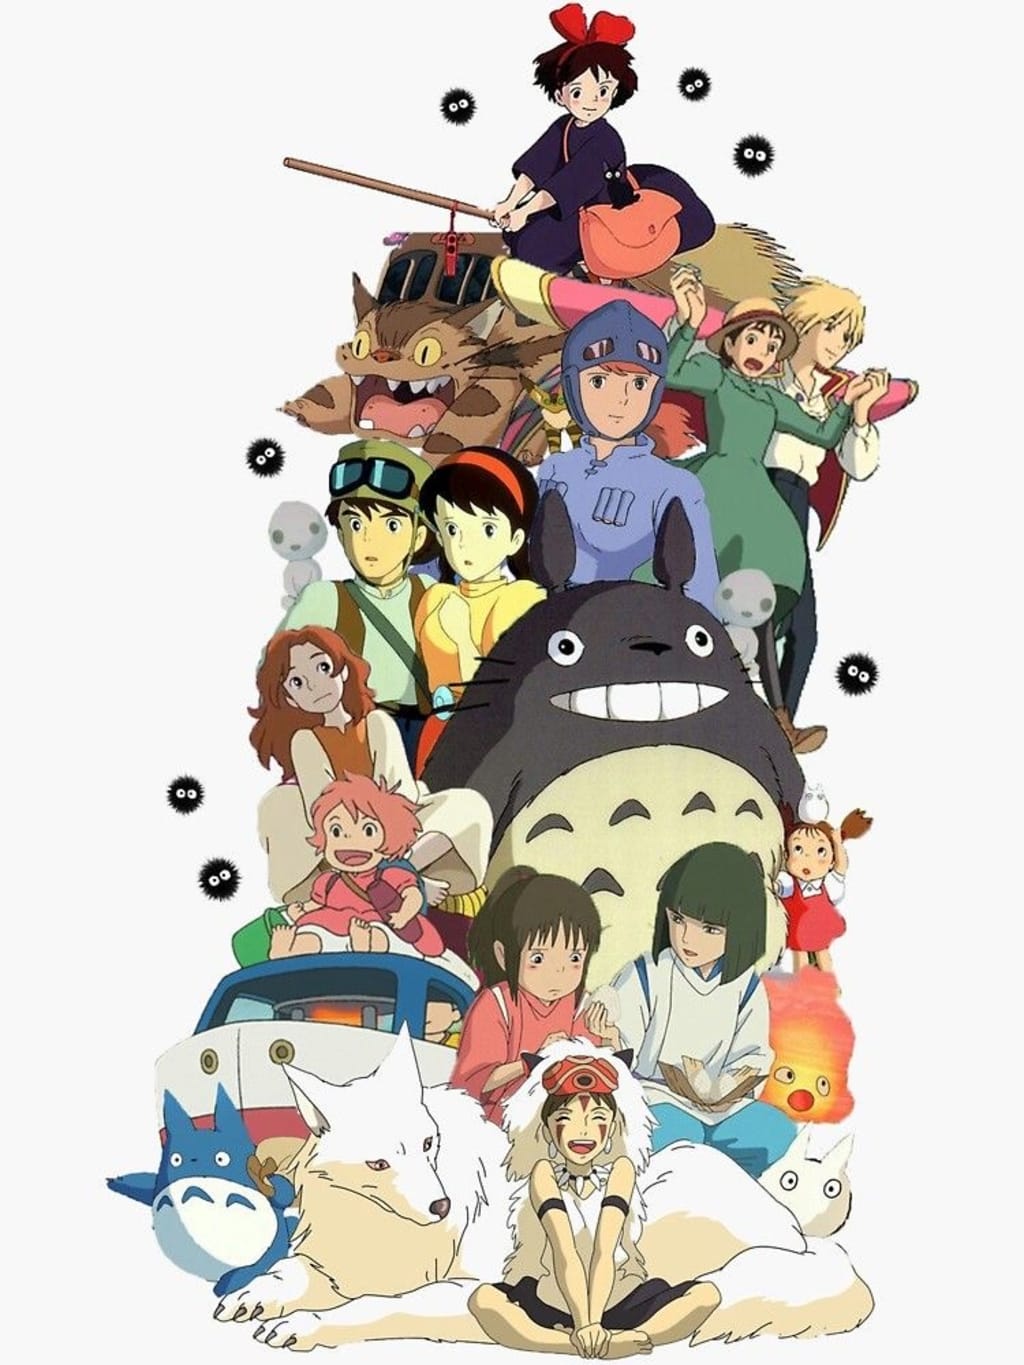 Favourite animes